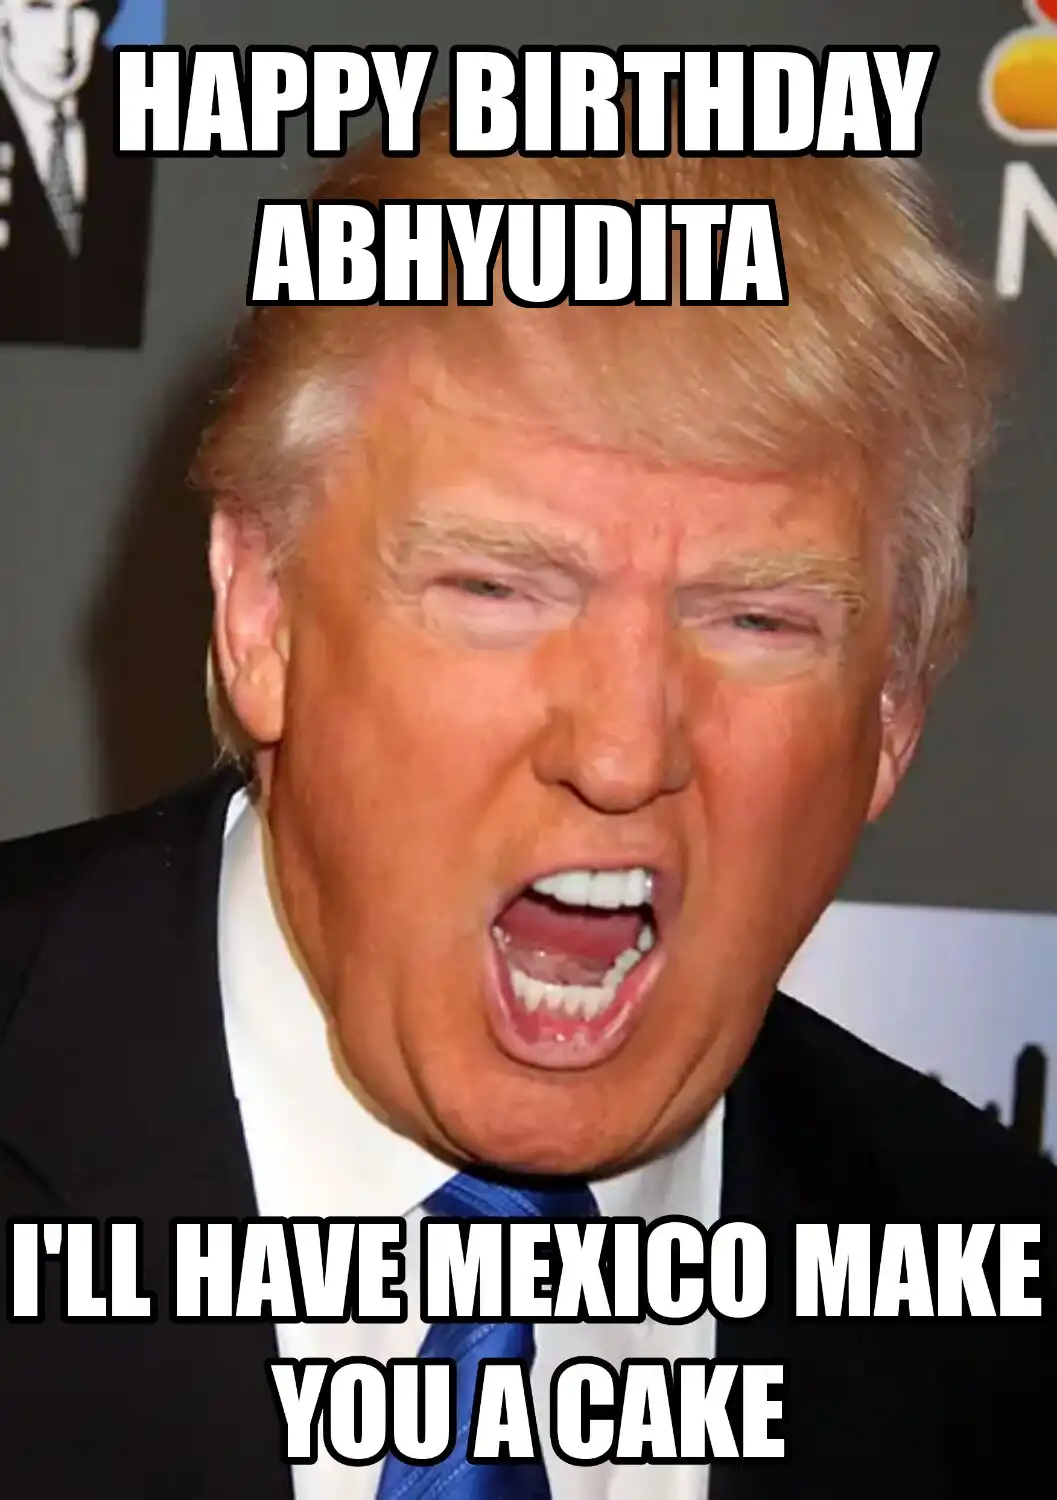 Happy Birthday Abhyudita Mexico Make You A Cake Meme